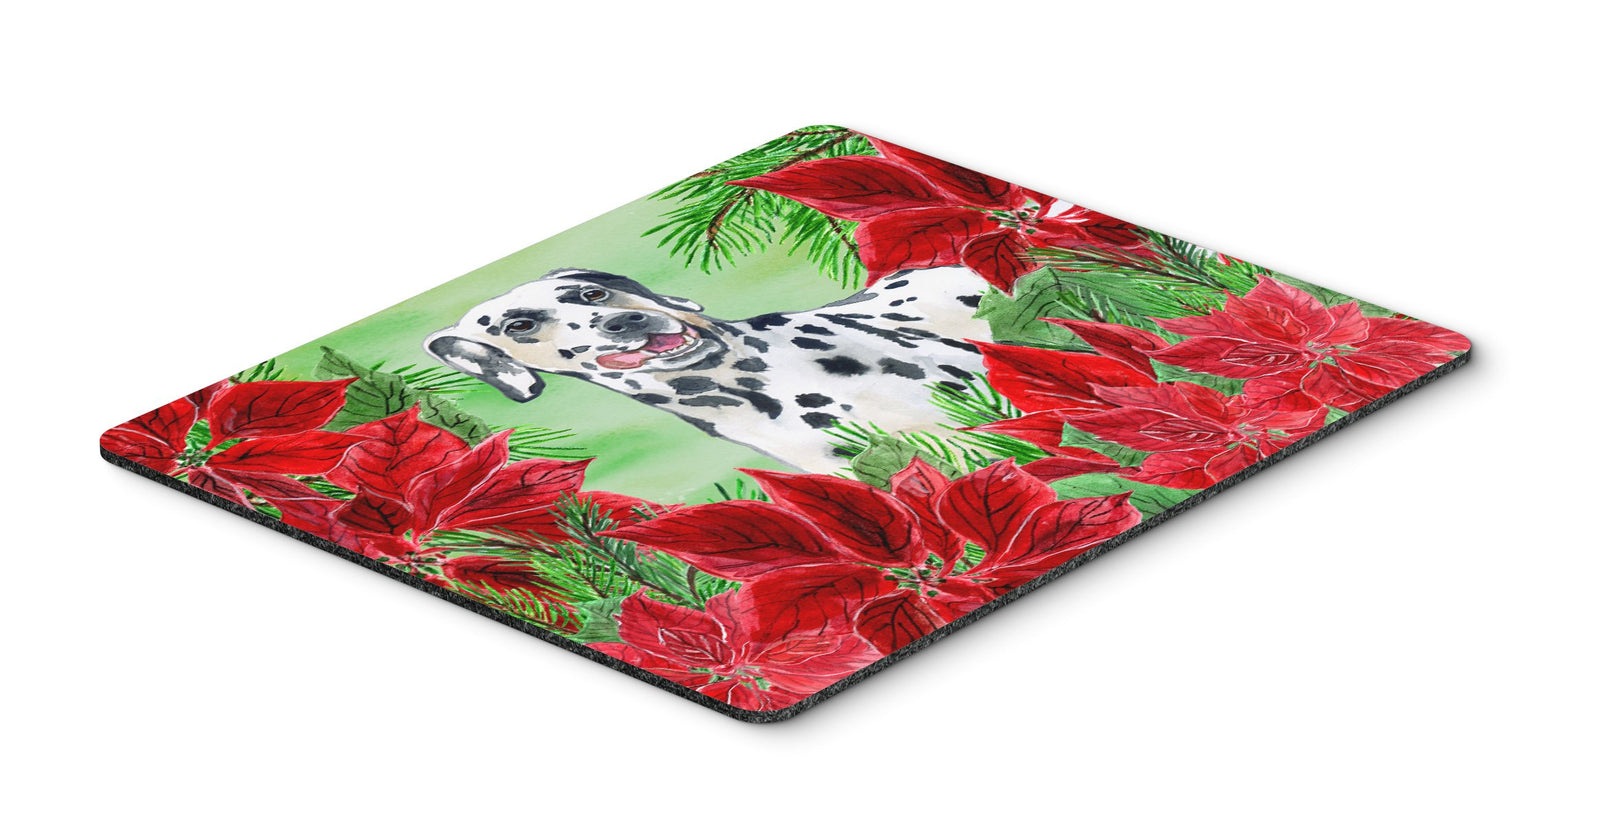 Dalmatian Poinsettas Mouse Pad, Hot Pad or Trivet CK1301MP by Caroline's Treasures